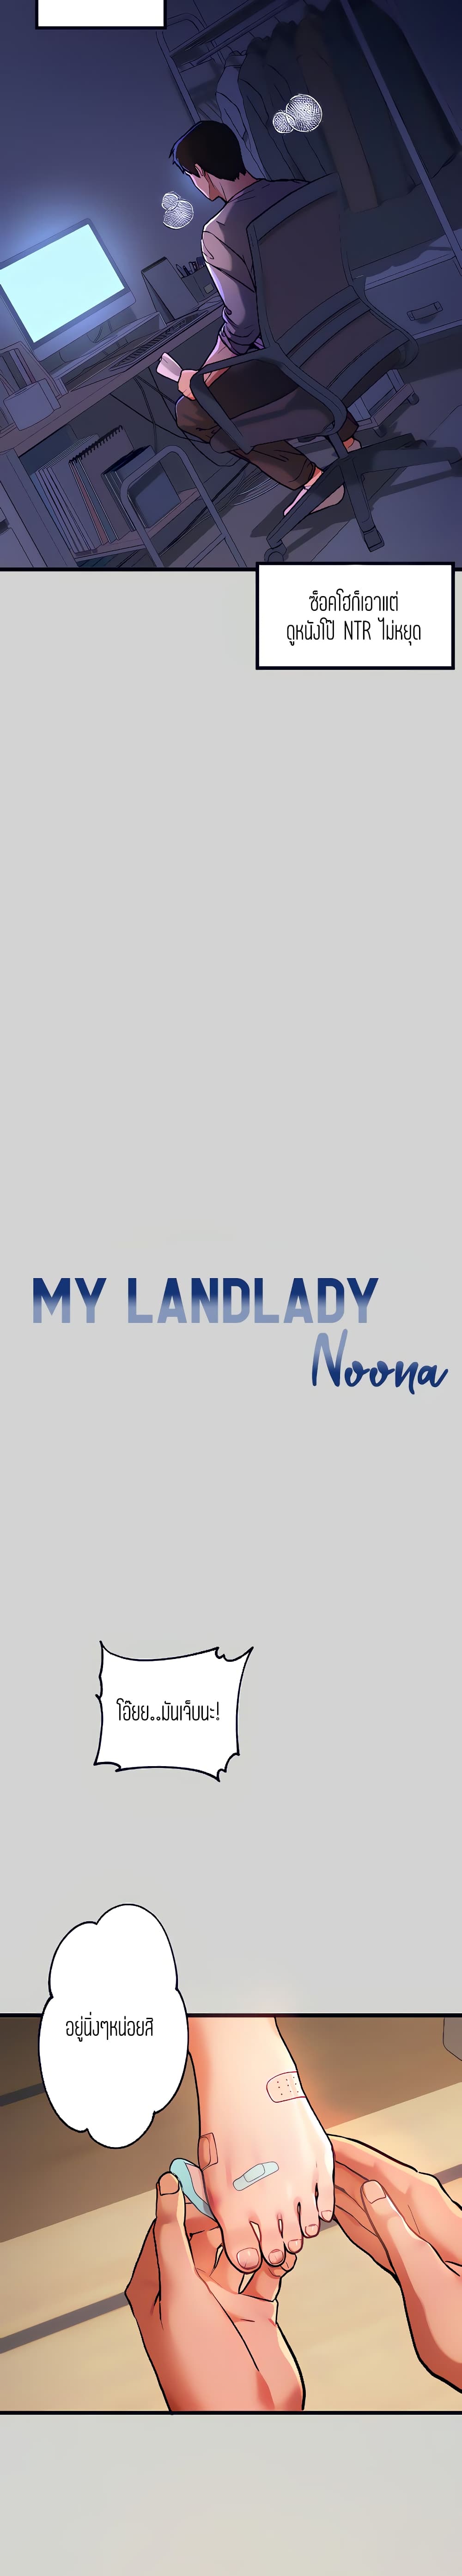 My Landlady Noona 32-32